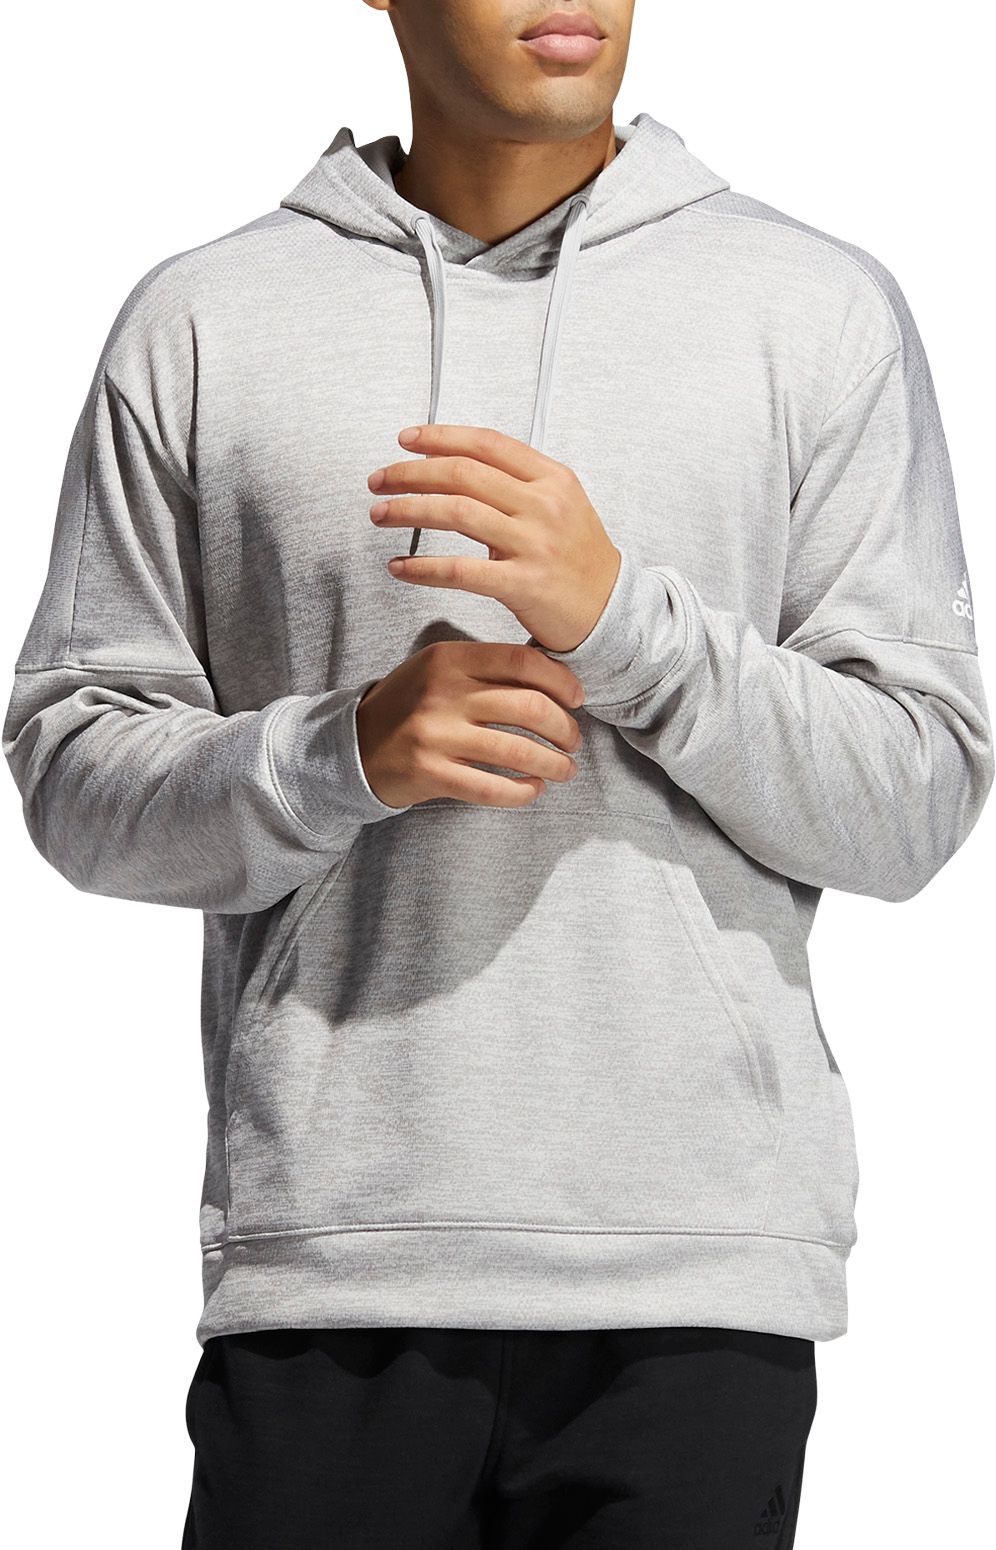 adidas team issue fleece pullover hoodie